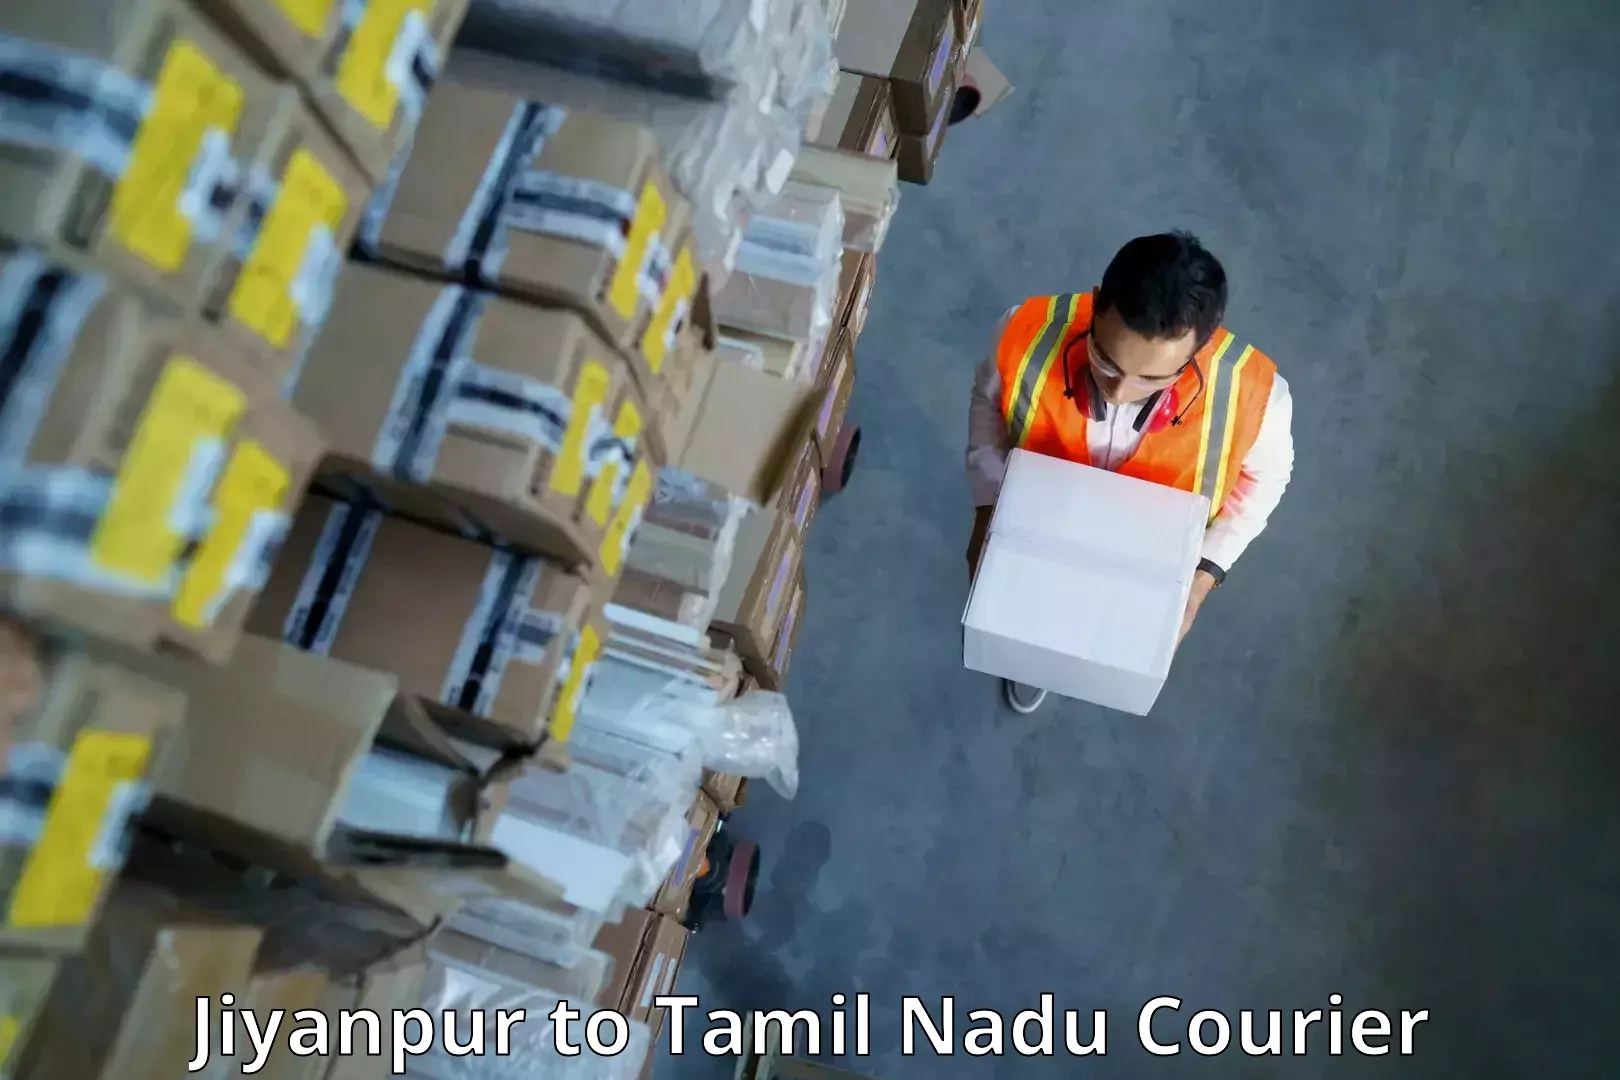 Courier service efficiency Jiyanpur to Tirukalukundram